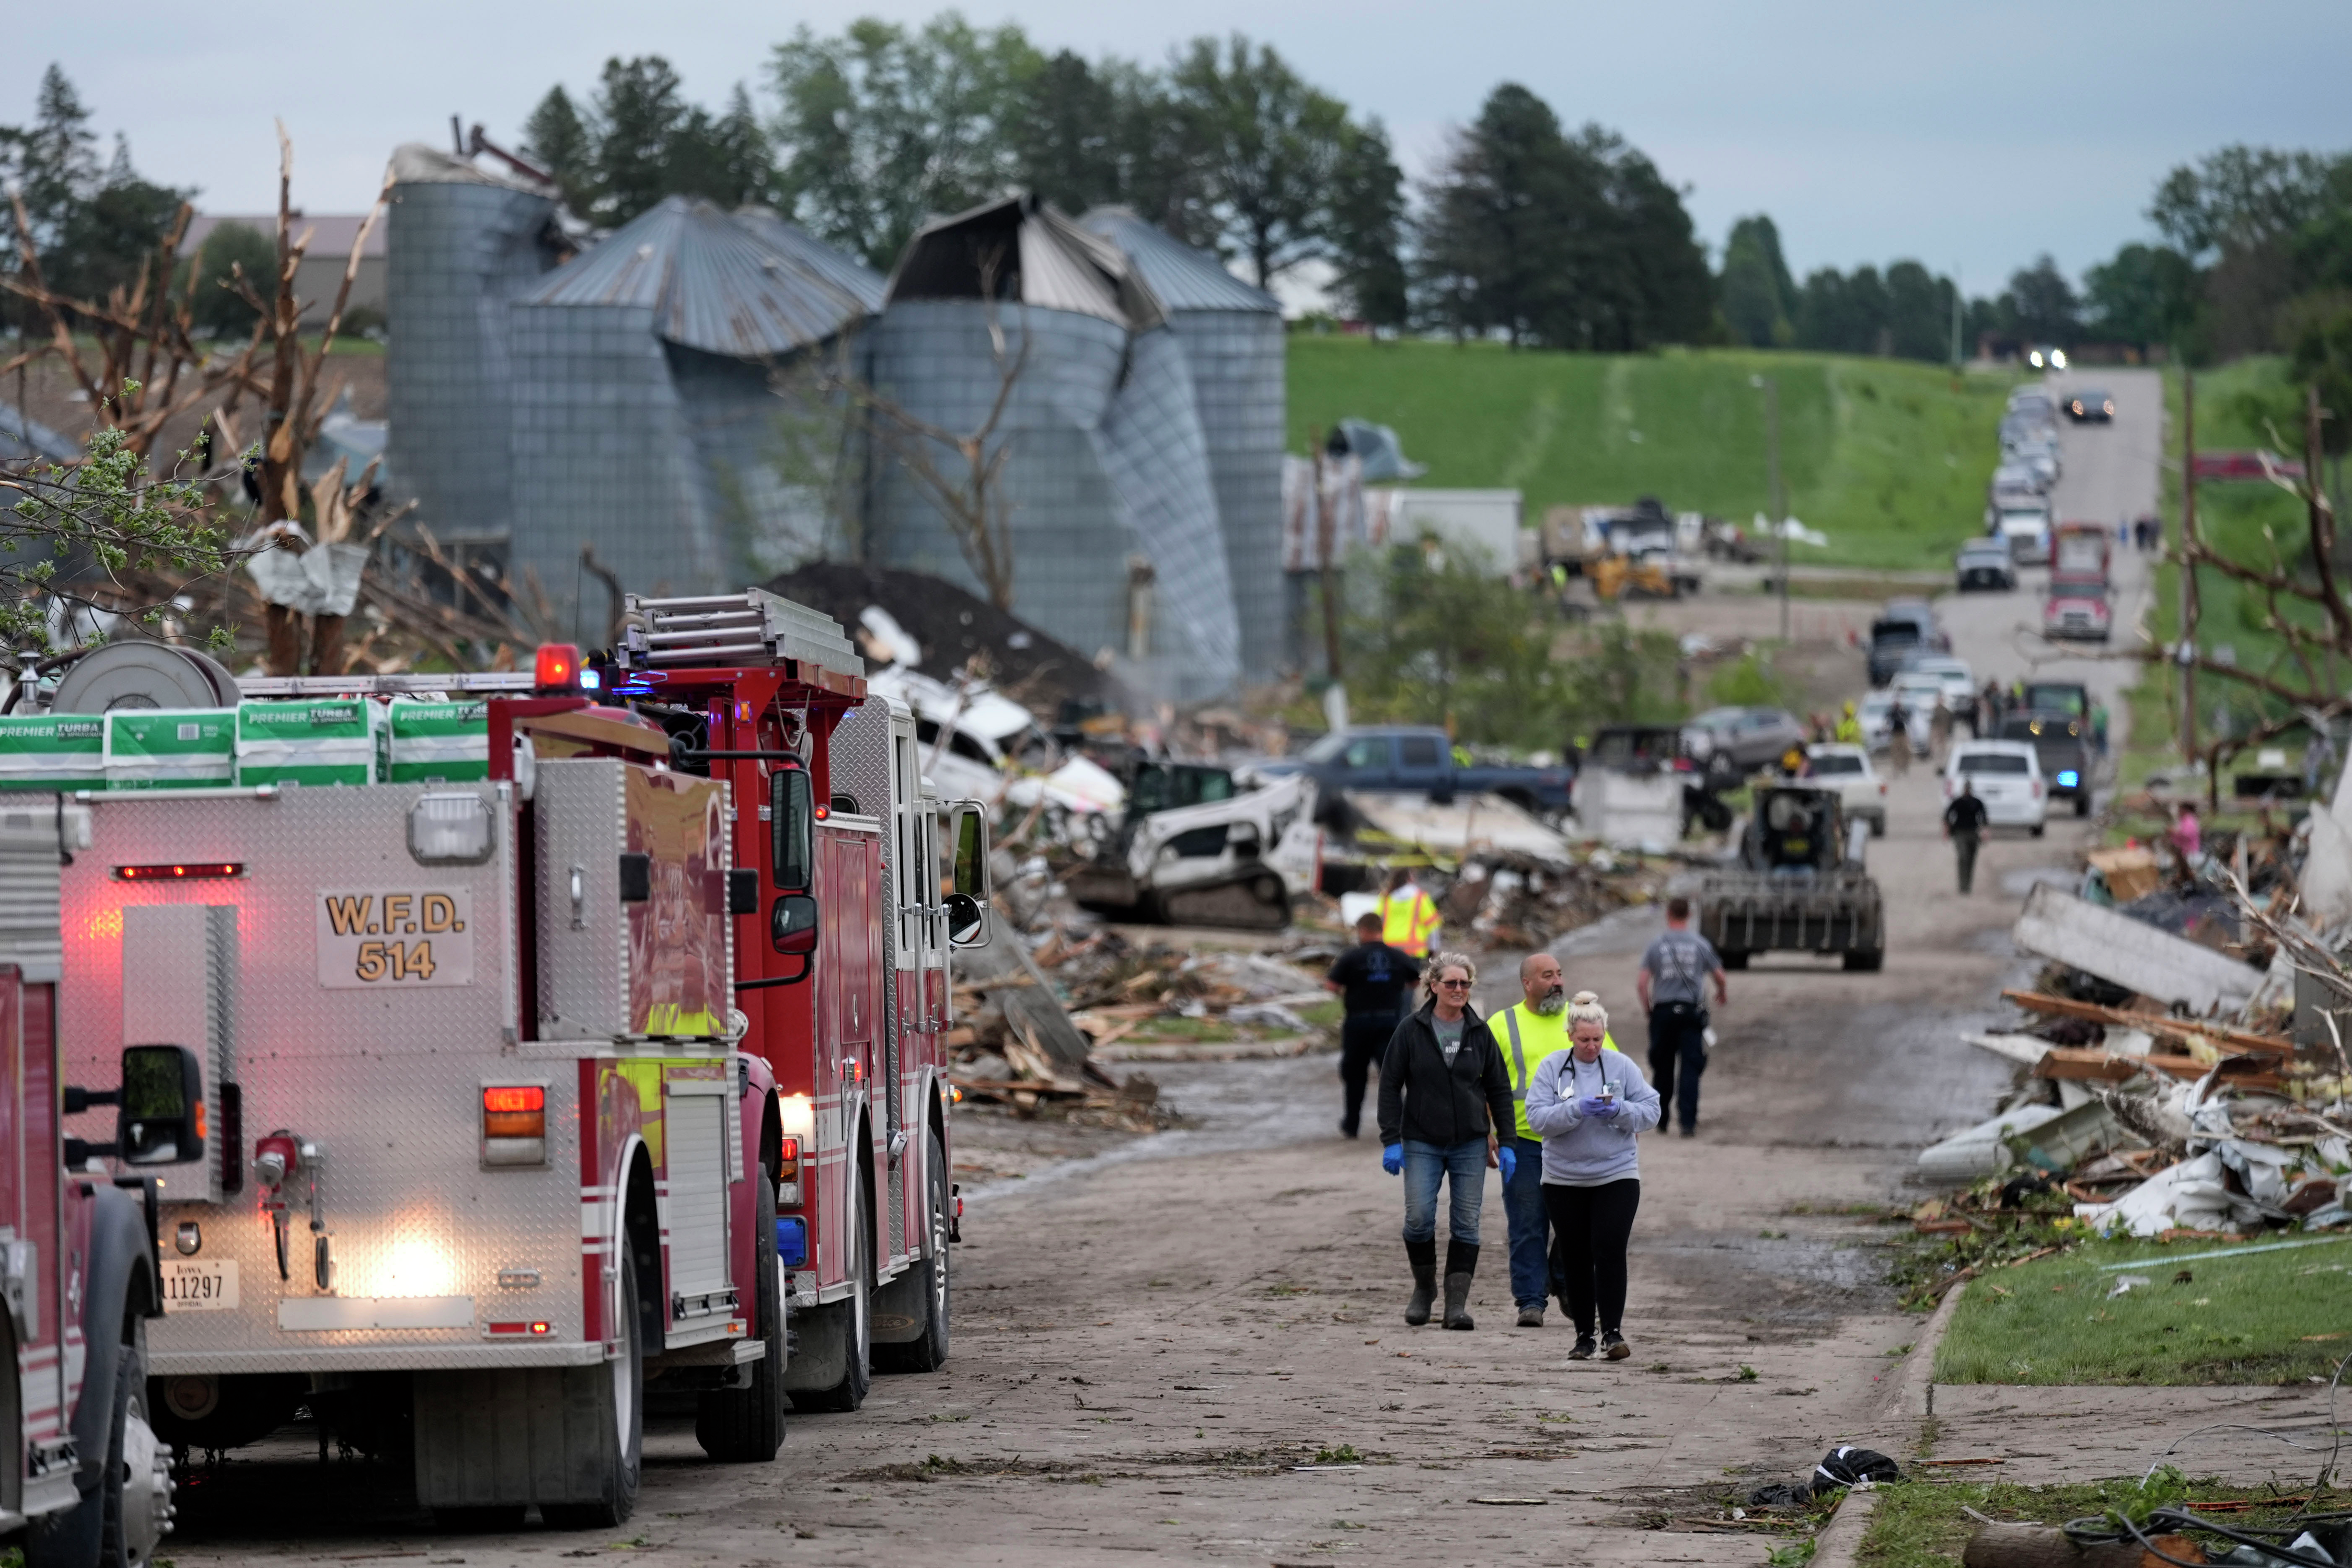 CBS News: Major damage in Greenfield, Iowa after Tuesday tornado